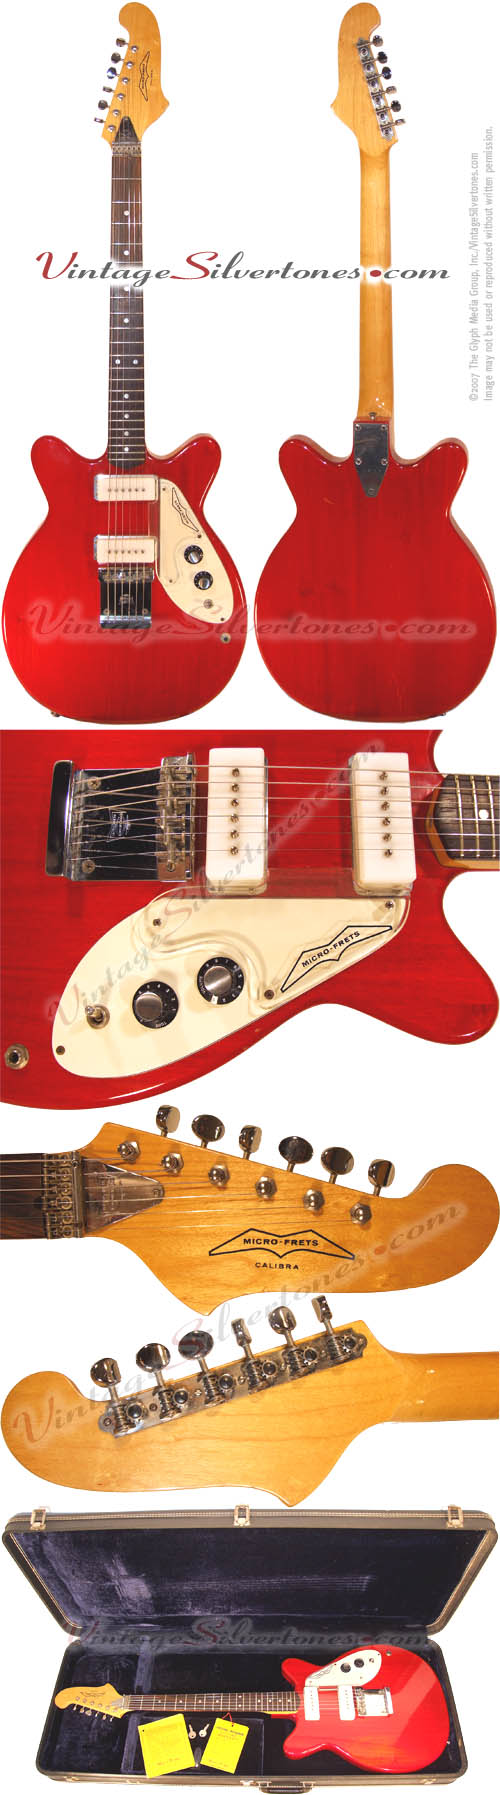 MicroFrets Calibra 2 pickup transred semihollow body electric guitar with original case